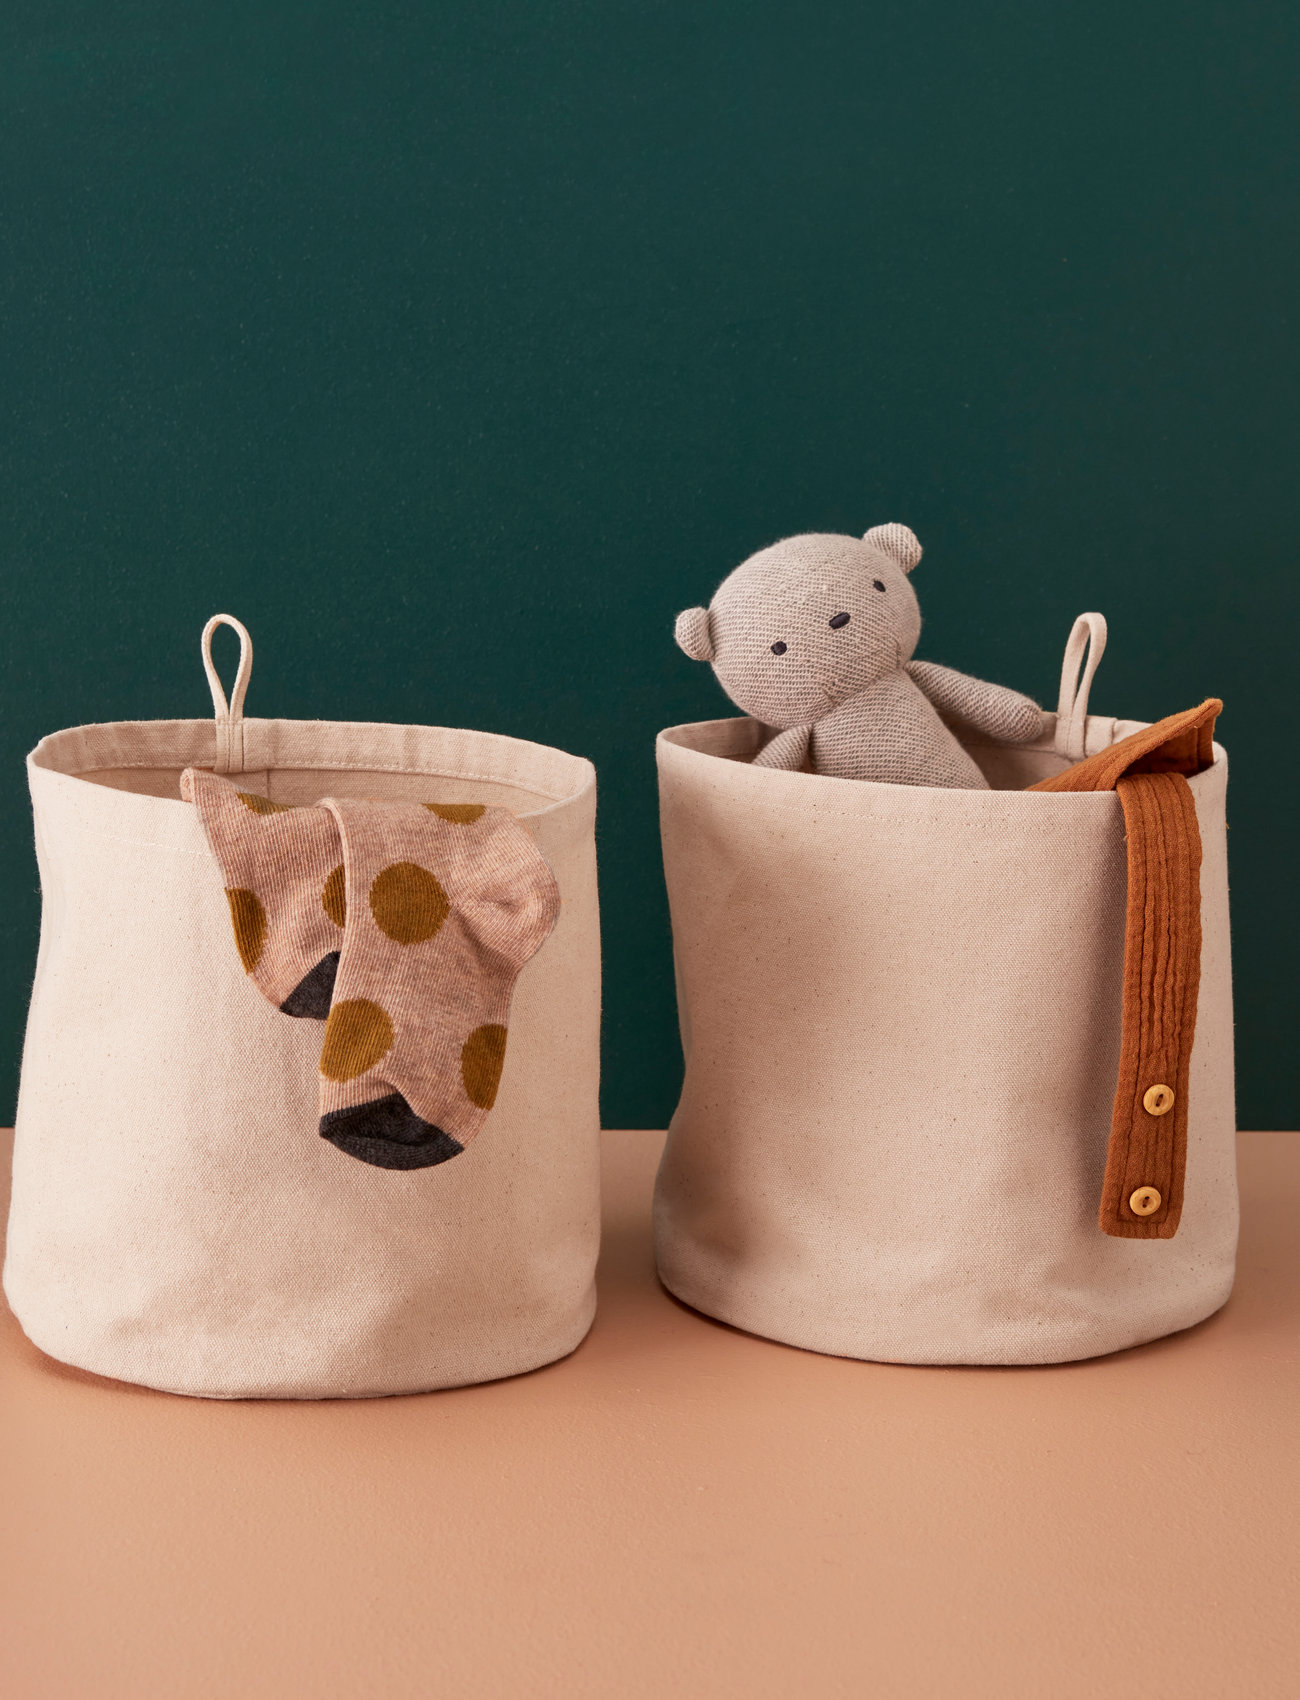 Kid's Concept - Storage textile cylinder 2pcs off white - storage baskets - white - 1